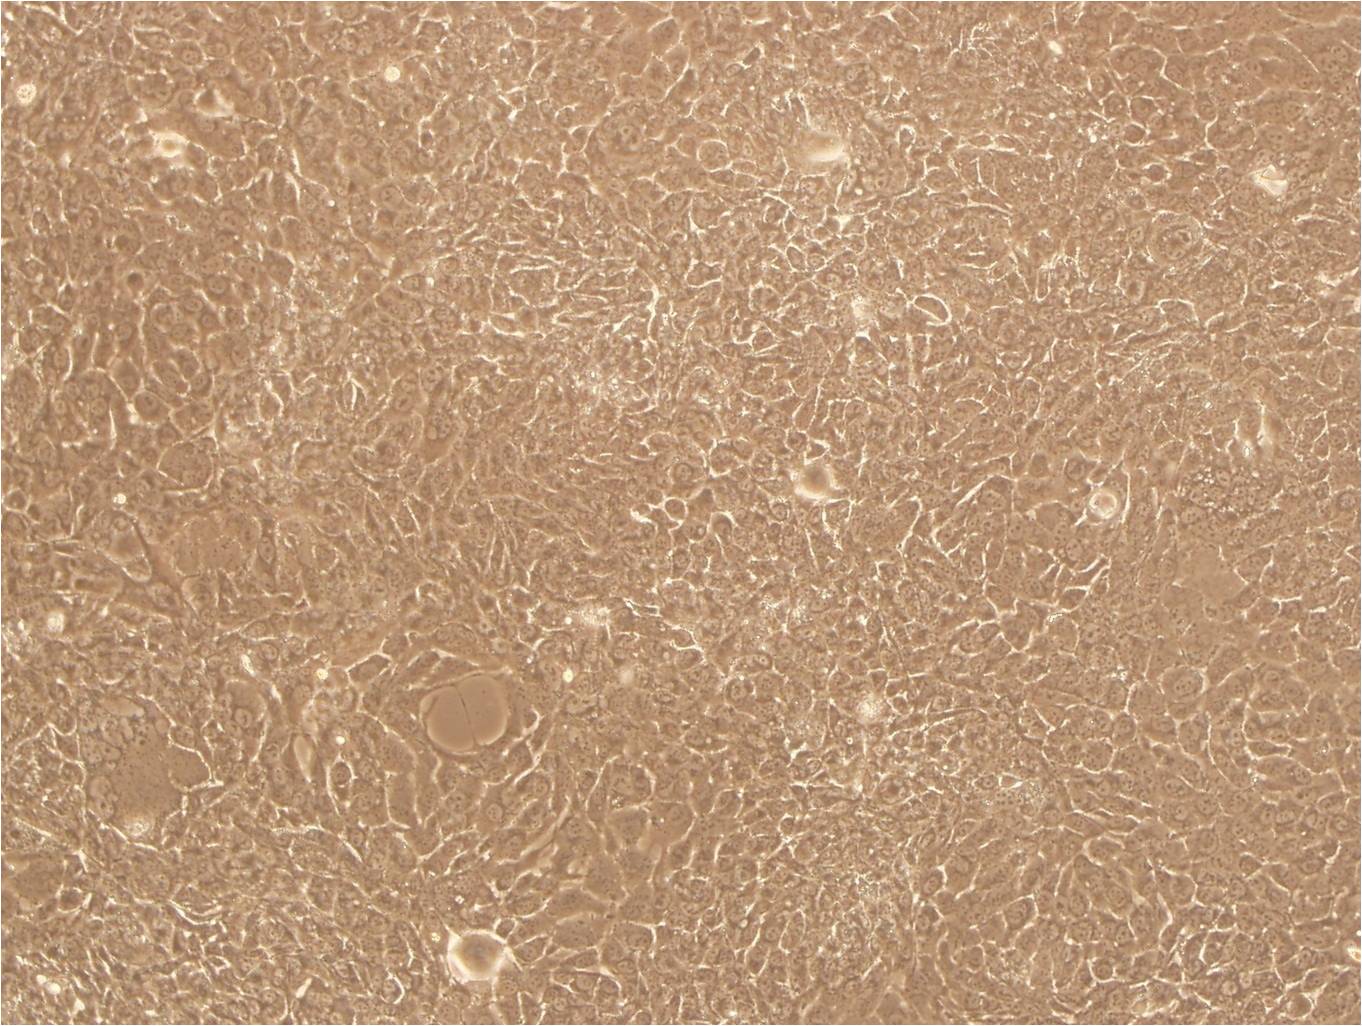 FRhK-4 Cells|恒河猴胚肾可传代细胞系,FRhK-4 Cells